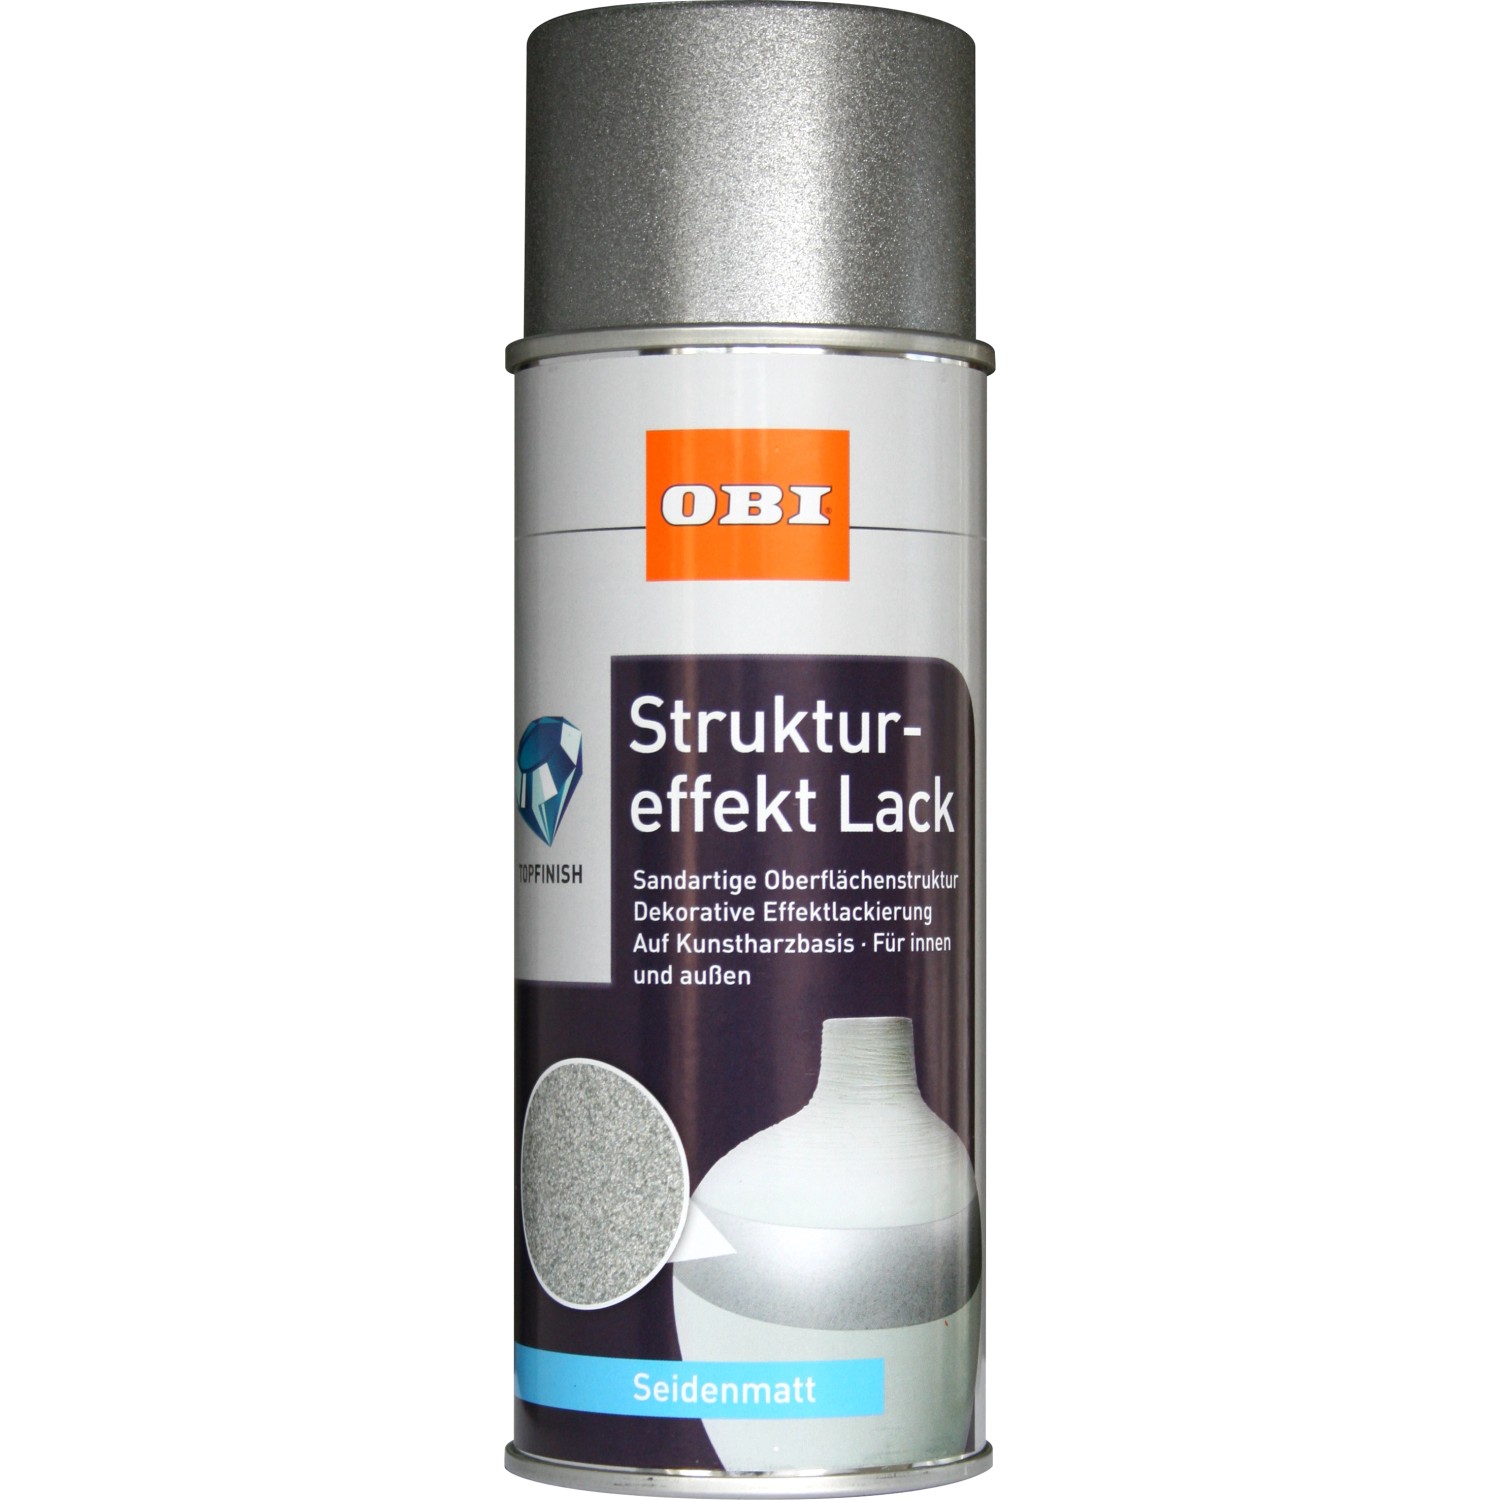 OBI Struktureffekt Lack Spray Anthrazit seidenmatt 400 ml von OBI